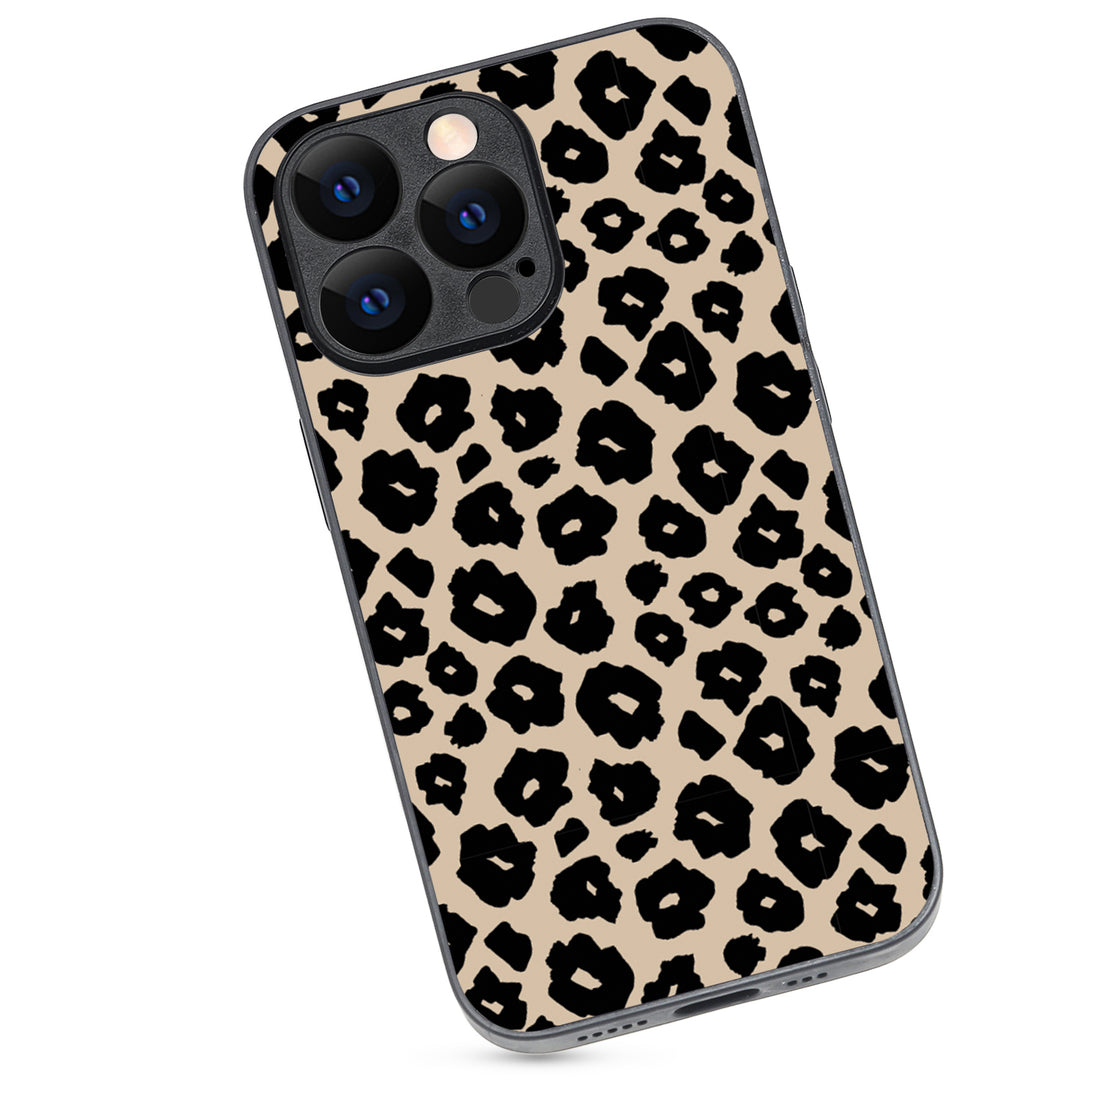 Leopard Animal Print iPhone 13 Pro Case